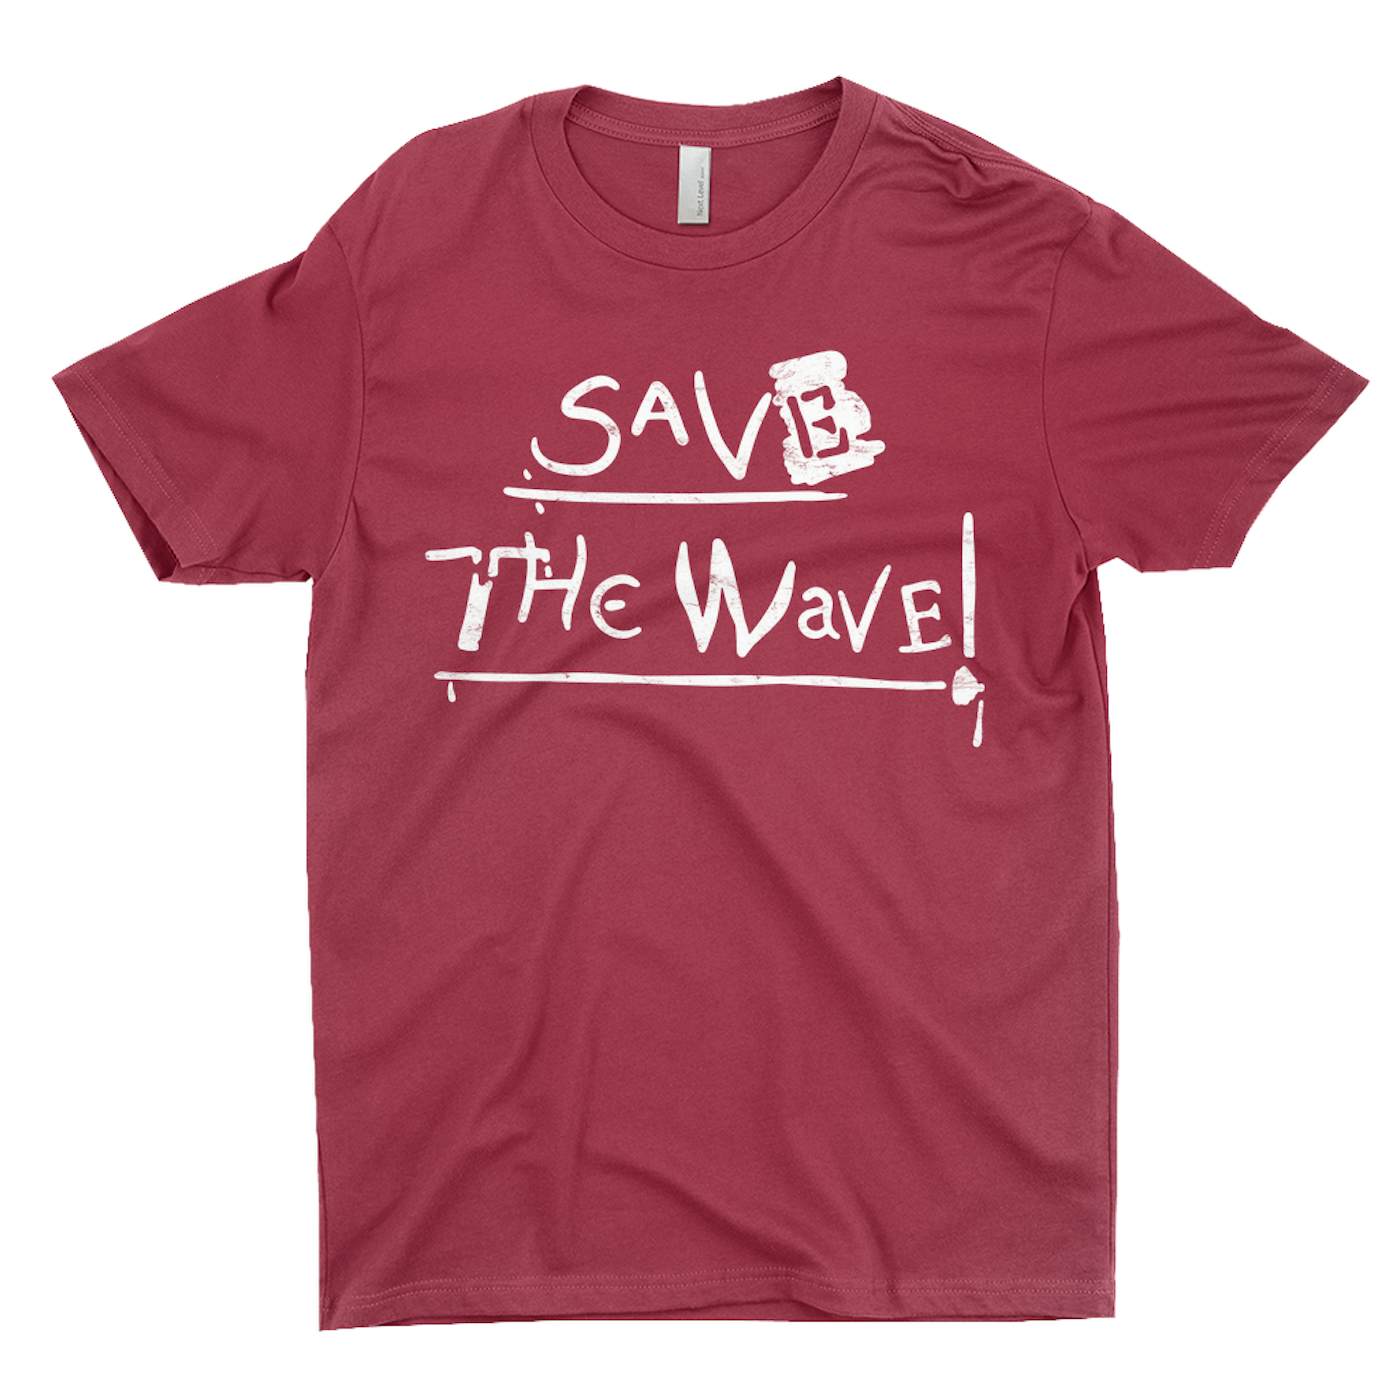 Joan Jett & the BlackheartsT-Shirt | Save The Wave Worn By Joan Jett Joan Jett And The Blackhearts Shirt